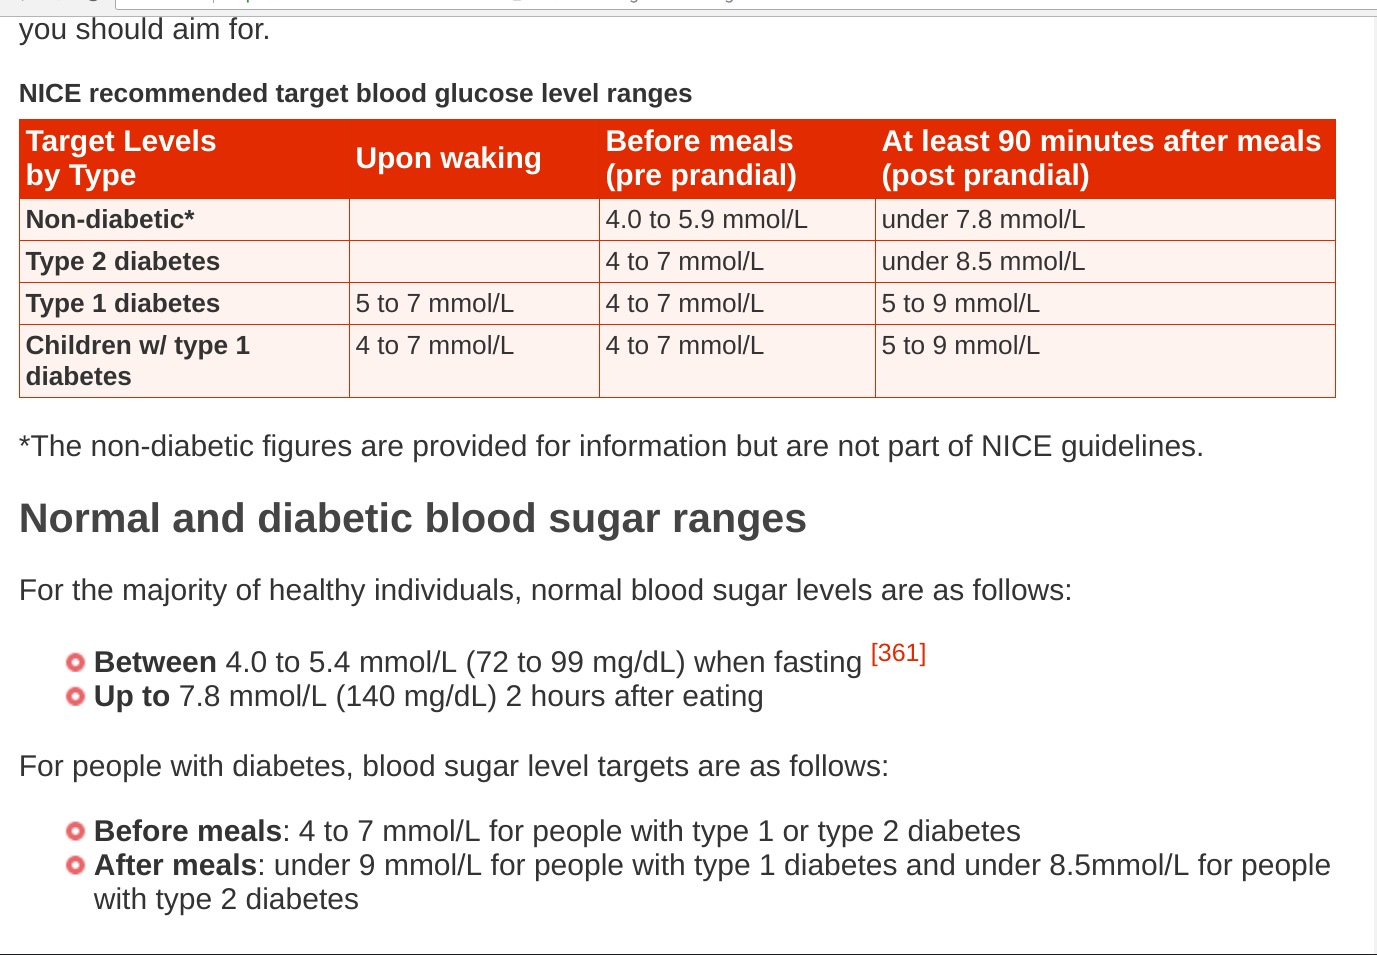 nice guidelines diabetes (type 1 children))